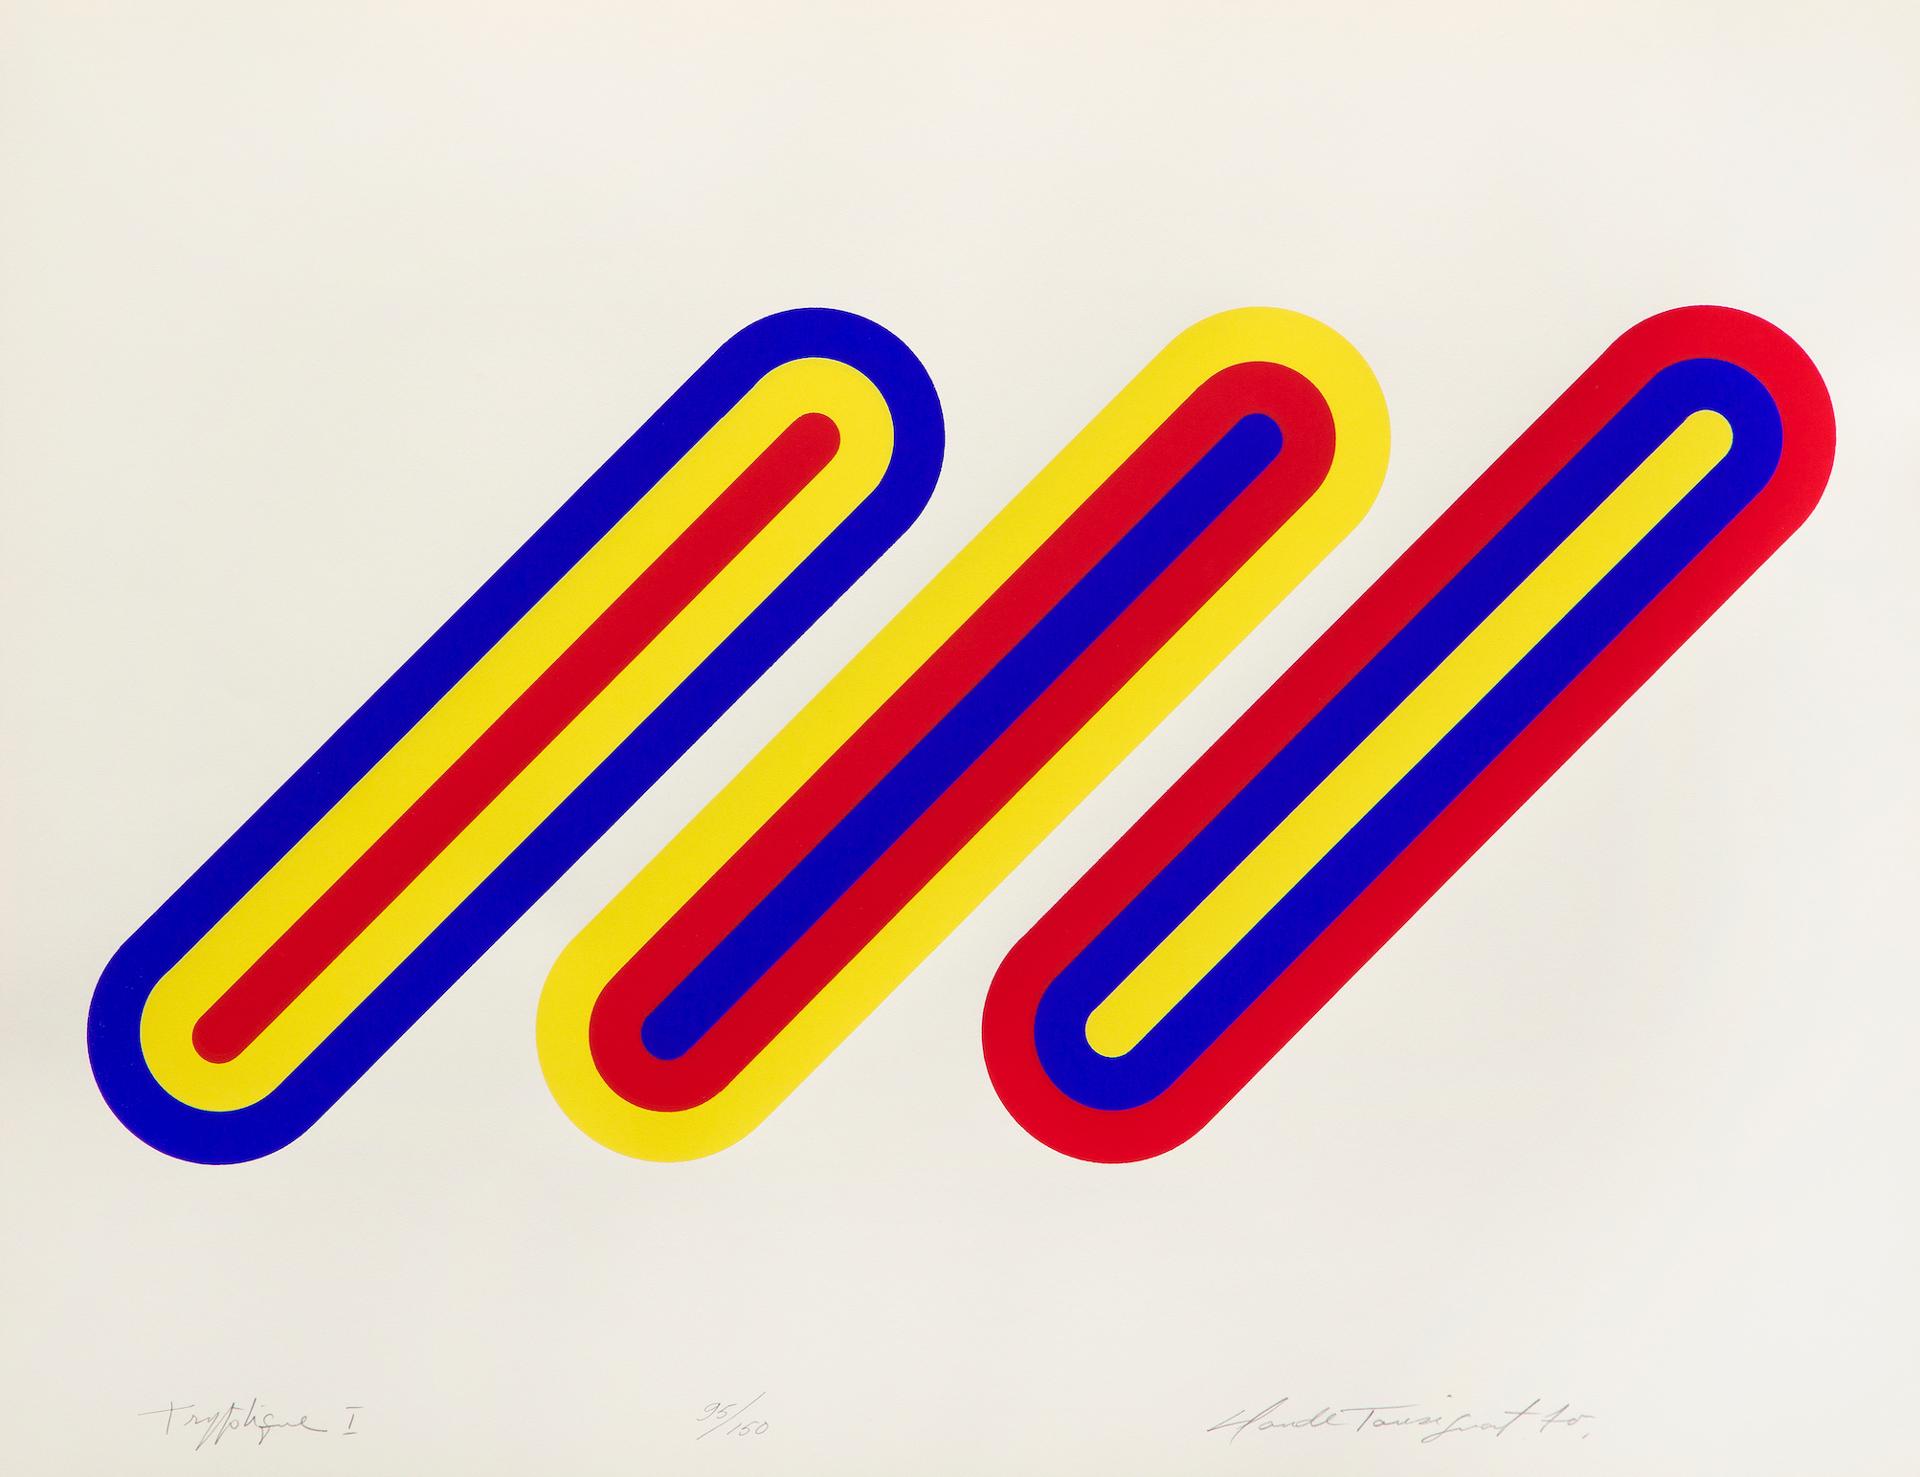 Claude Tousignant (1932) - Triptyque I, 1970